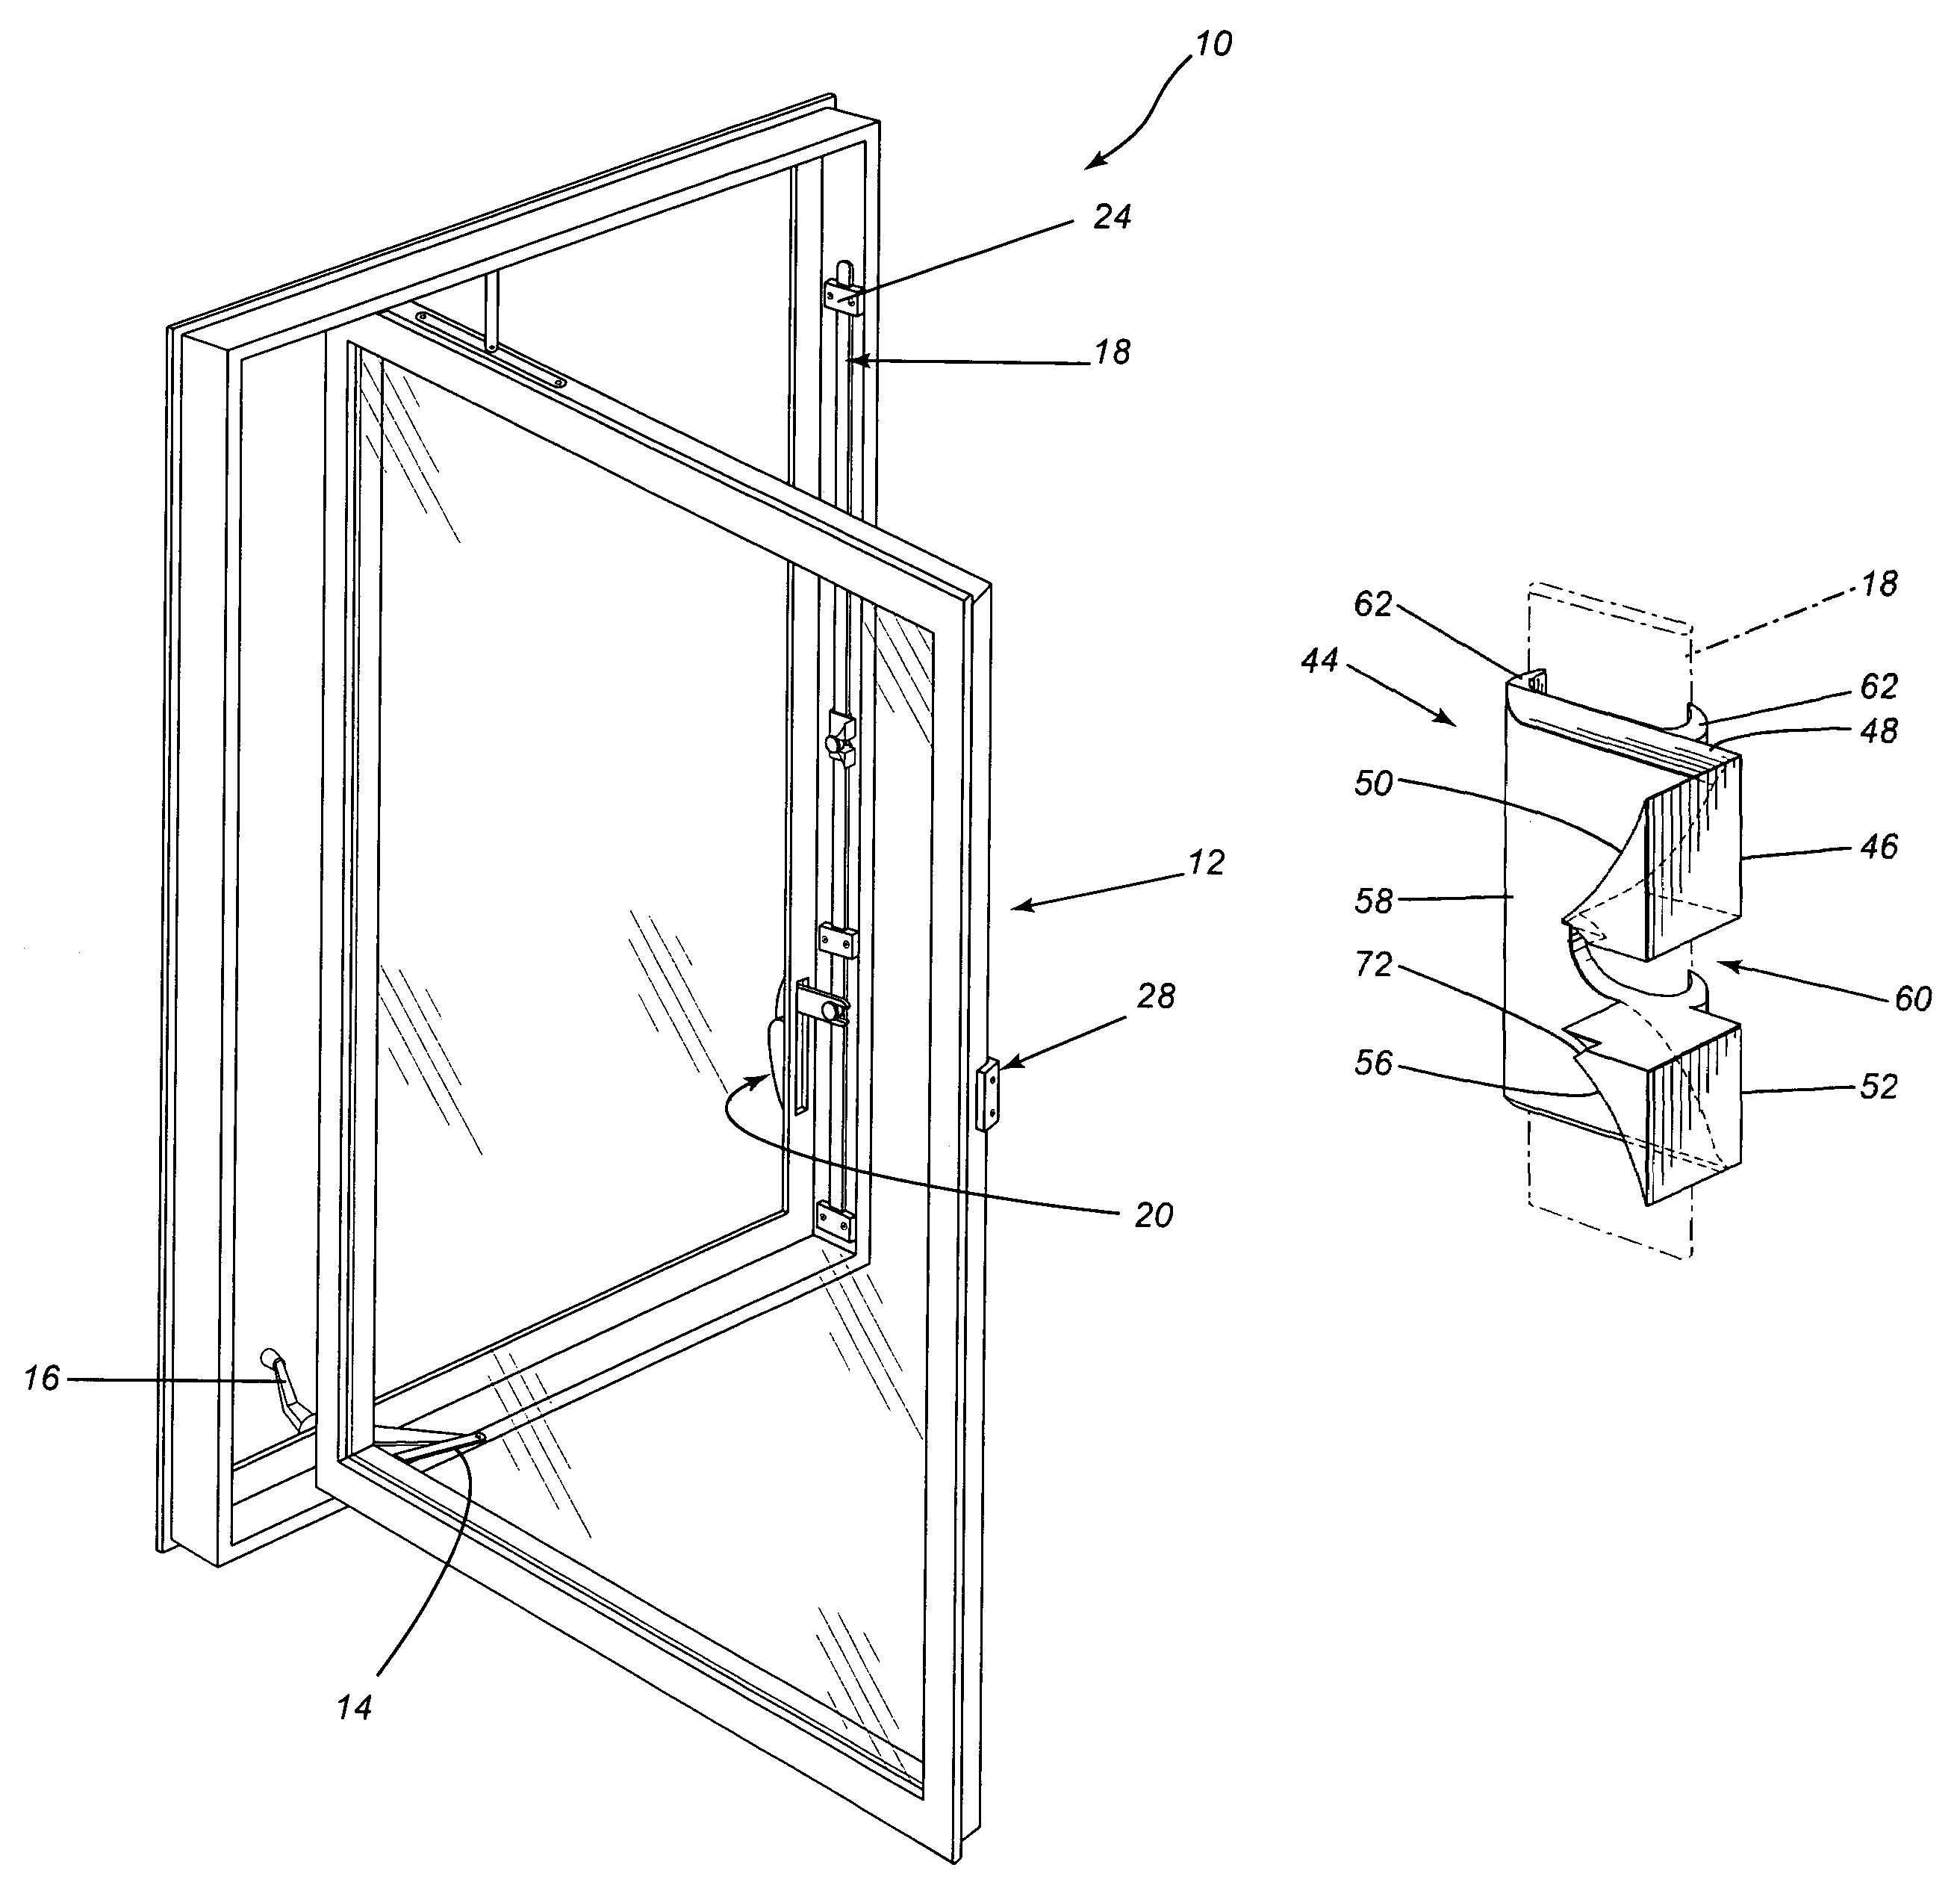 Sash locking device for casement window